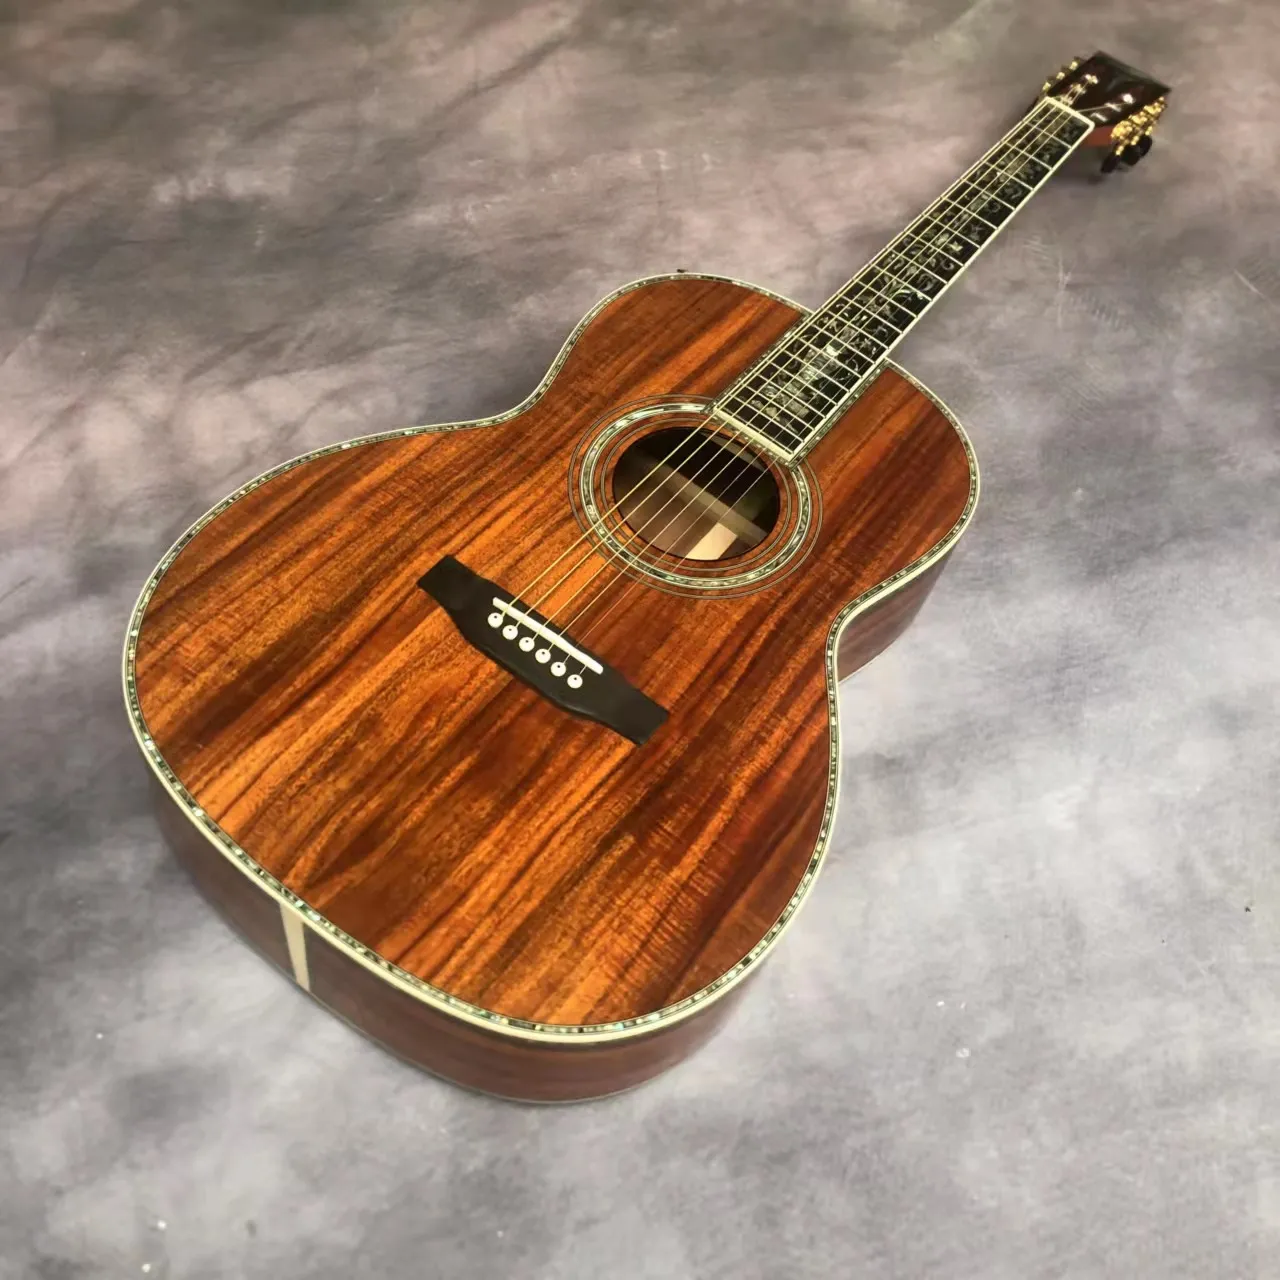 39 "Full koa Wood 0045 Luxury Black Finger Abalone shell Mosaic acoustic acoustic guitar